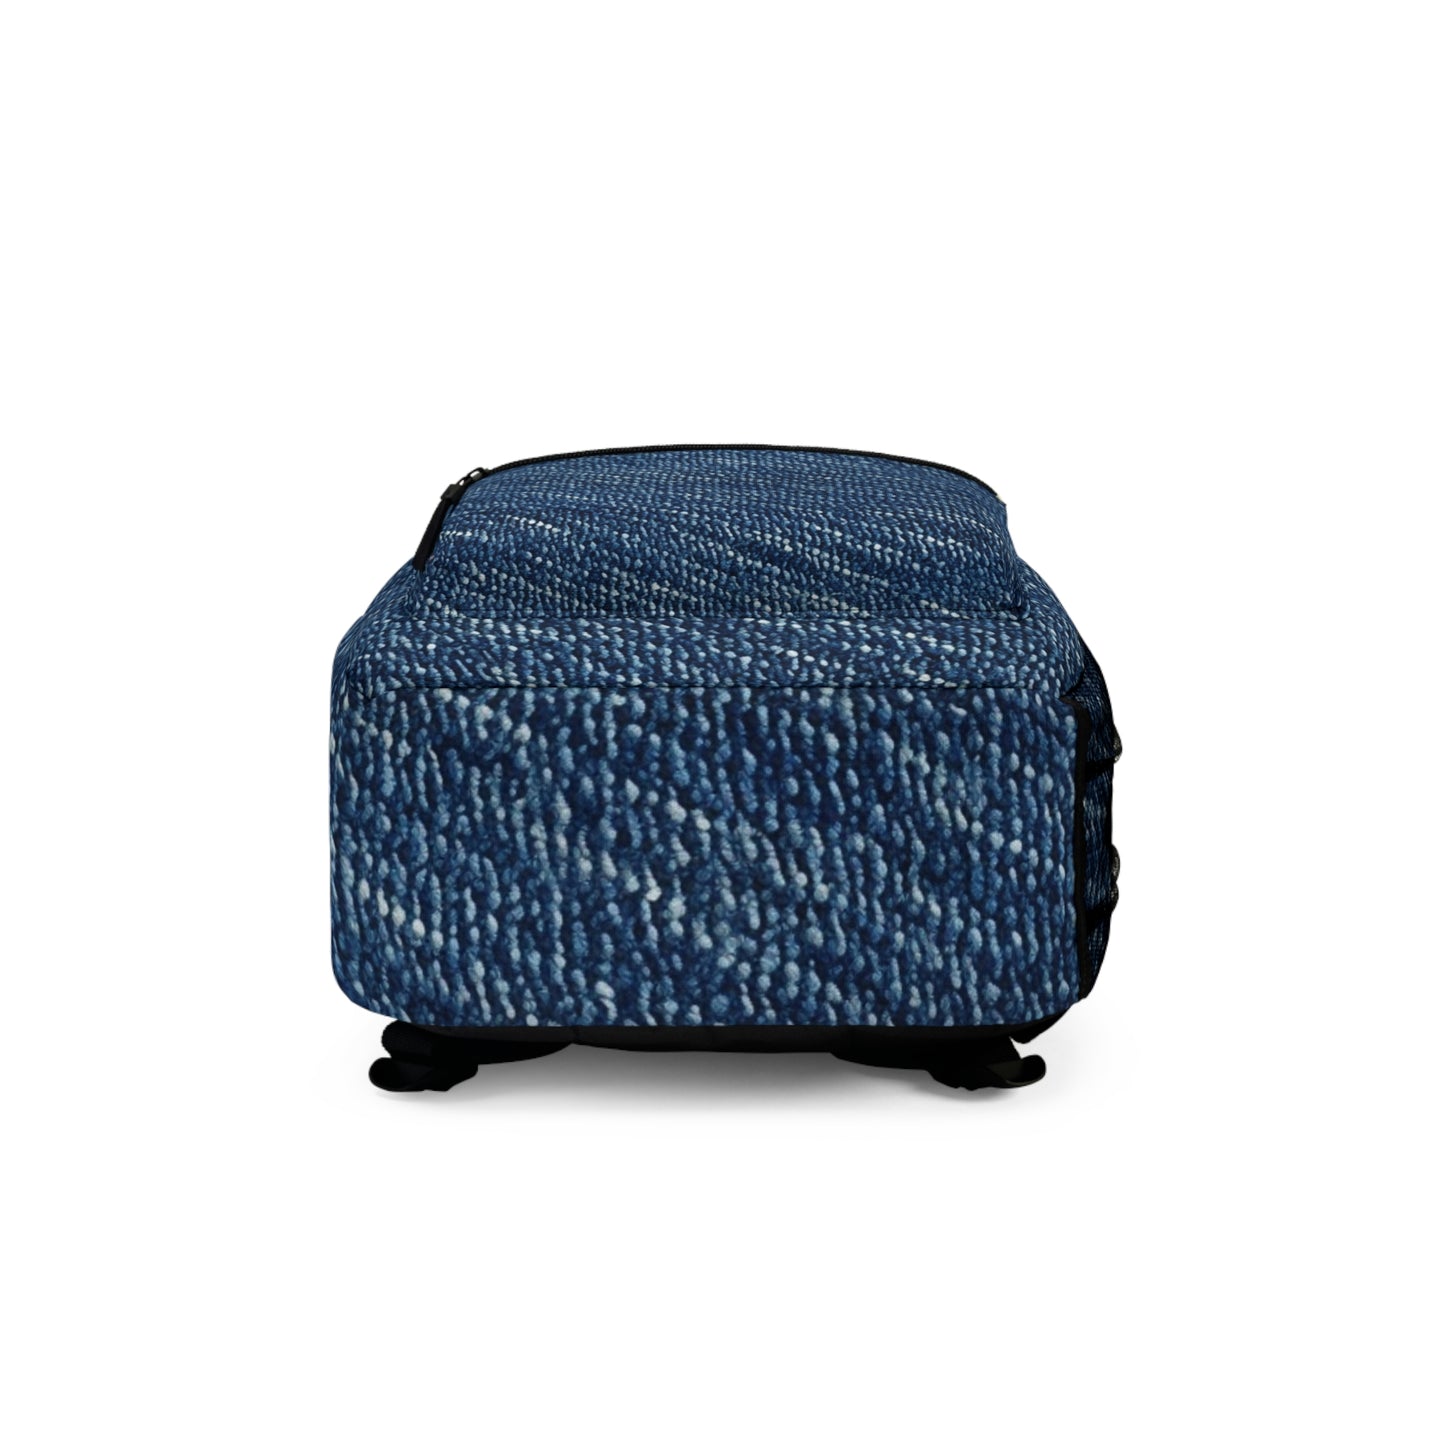 Denim-Inspired Design - Distinct Textured Fabric Pattern - Backpack